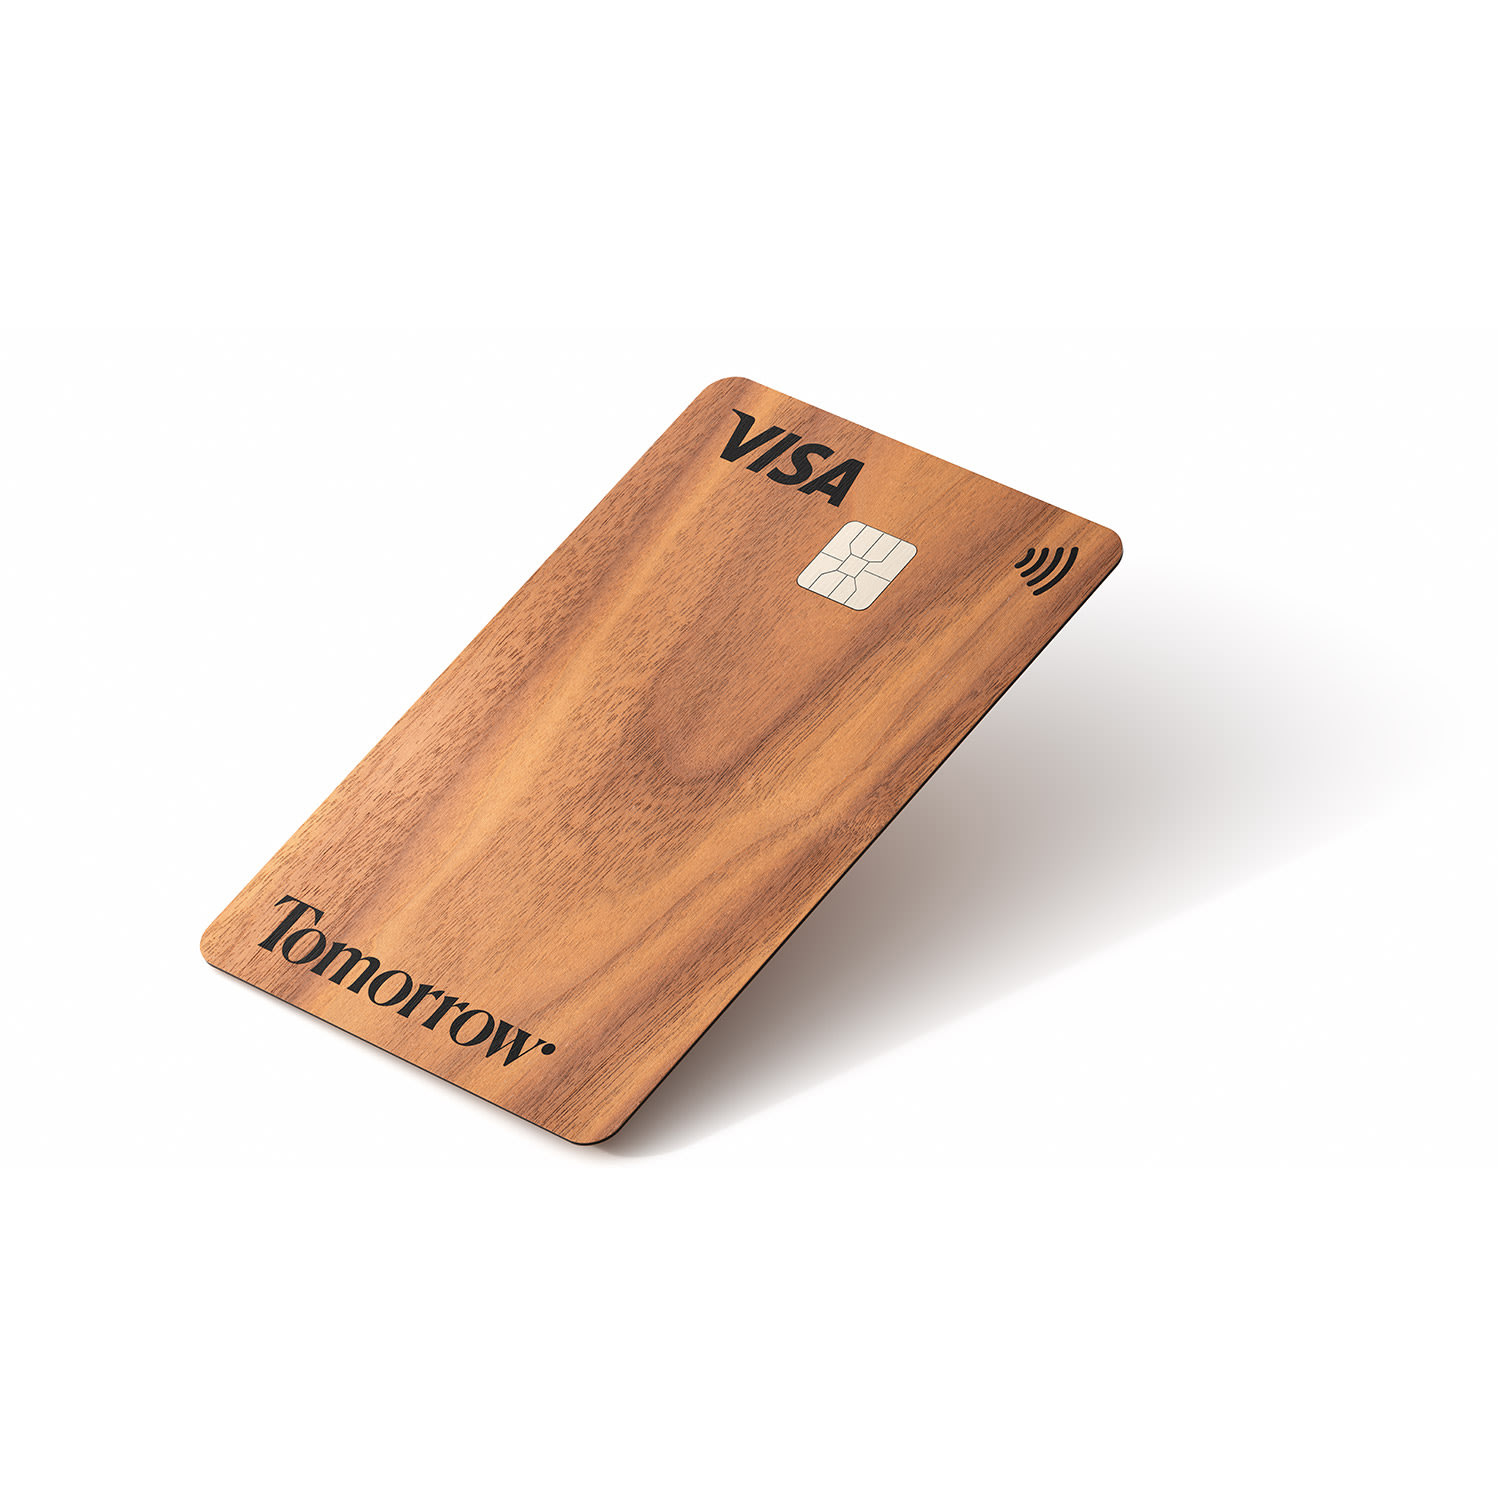 Die Tomorrow Wood Holzkarte aus Kirschholz für dein Girokonto